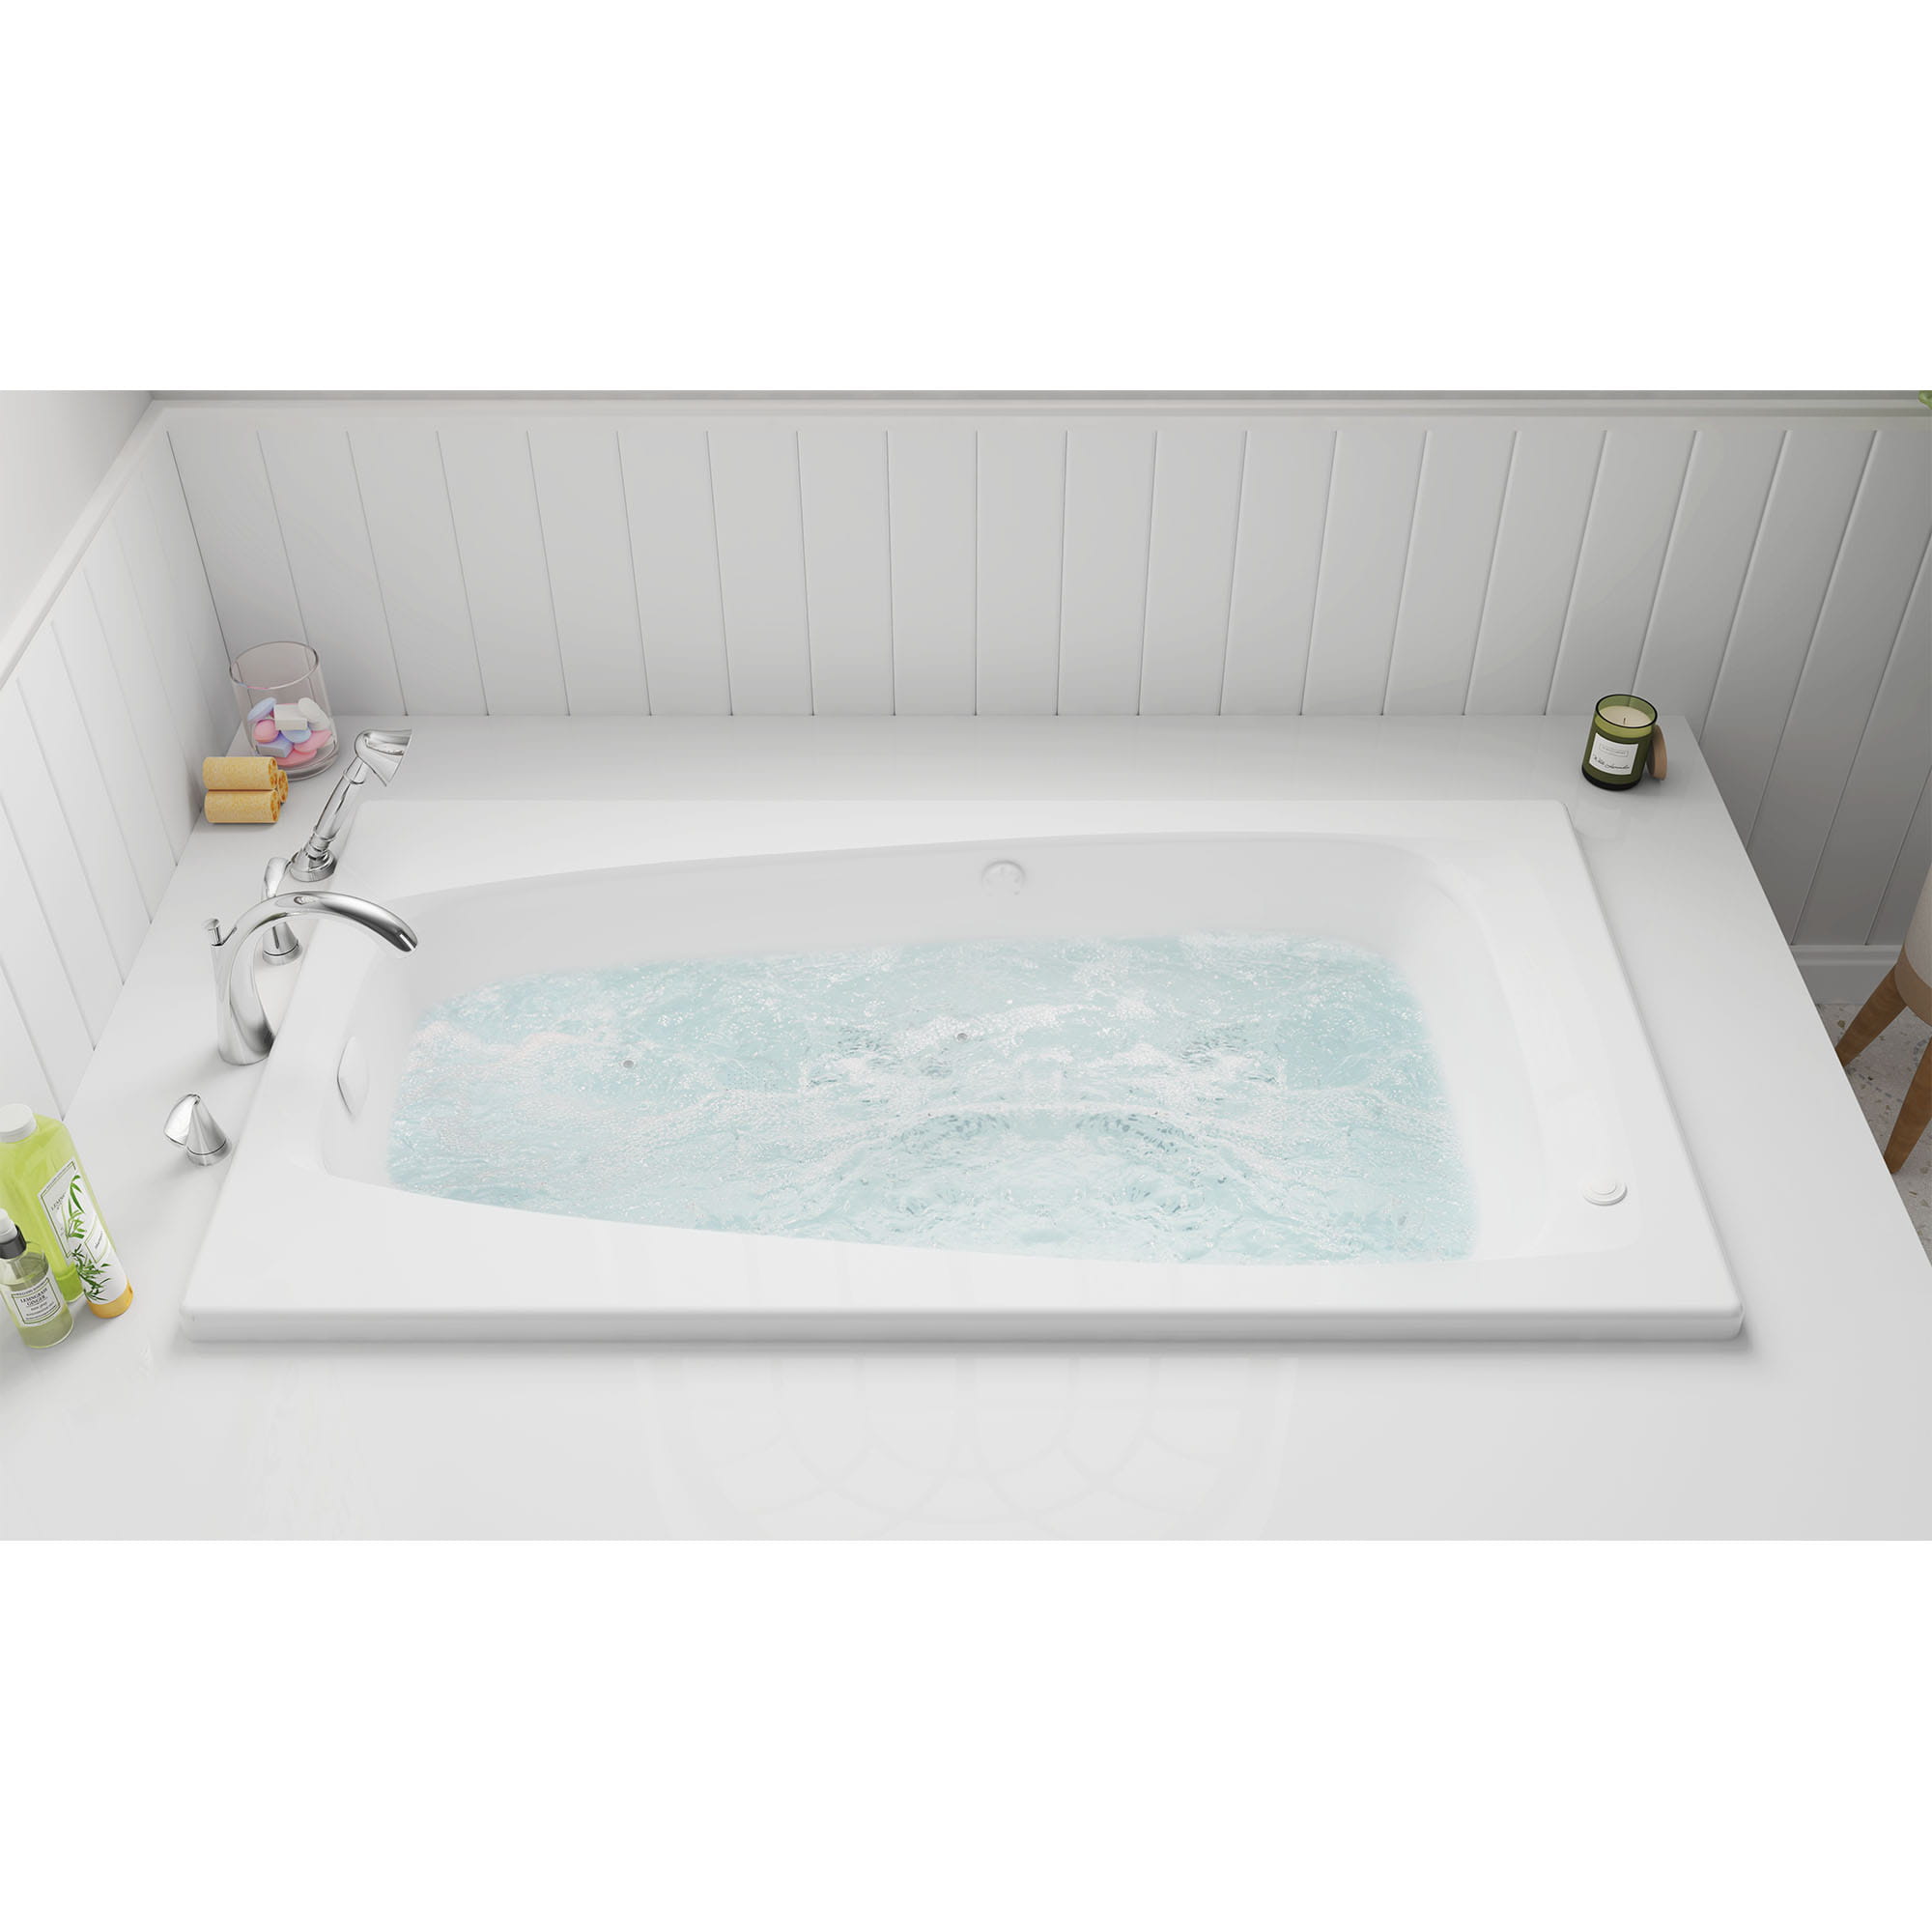 EverClean 60 in. Acrylic Rectangular Drop-In Whirlpool Bathtub